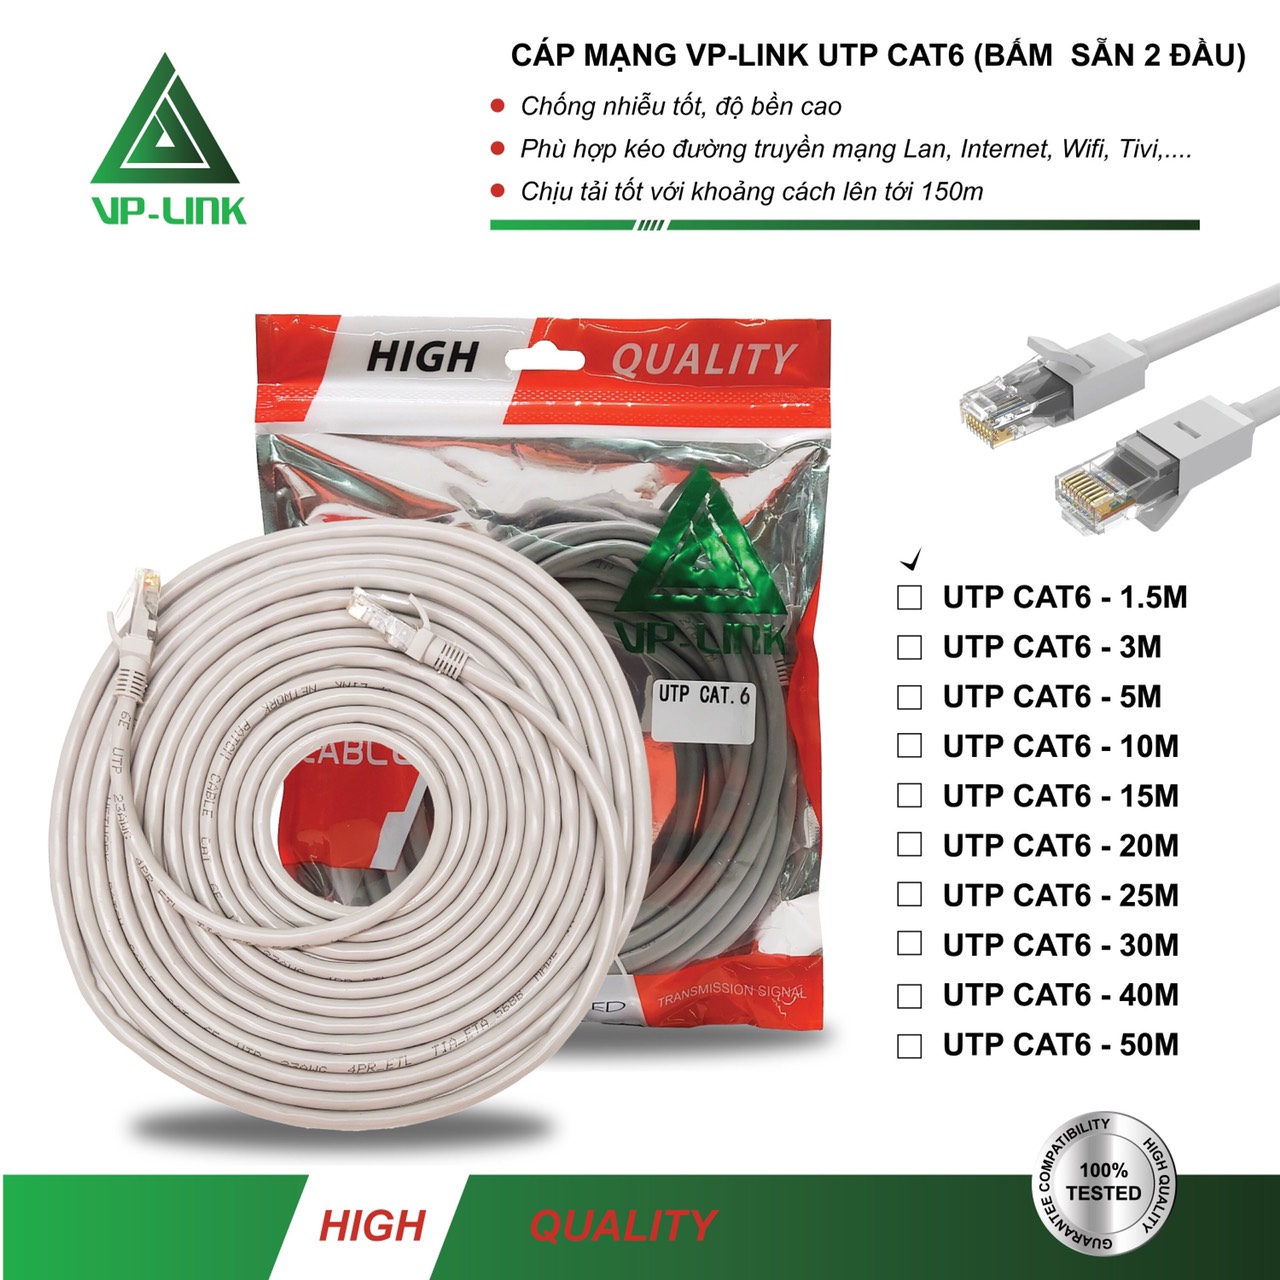 Cable LAN VP-LINK UTP CAT6 1.5m Bấm sẵn 2 đầu